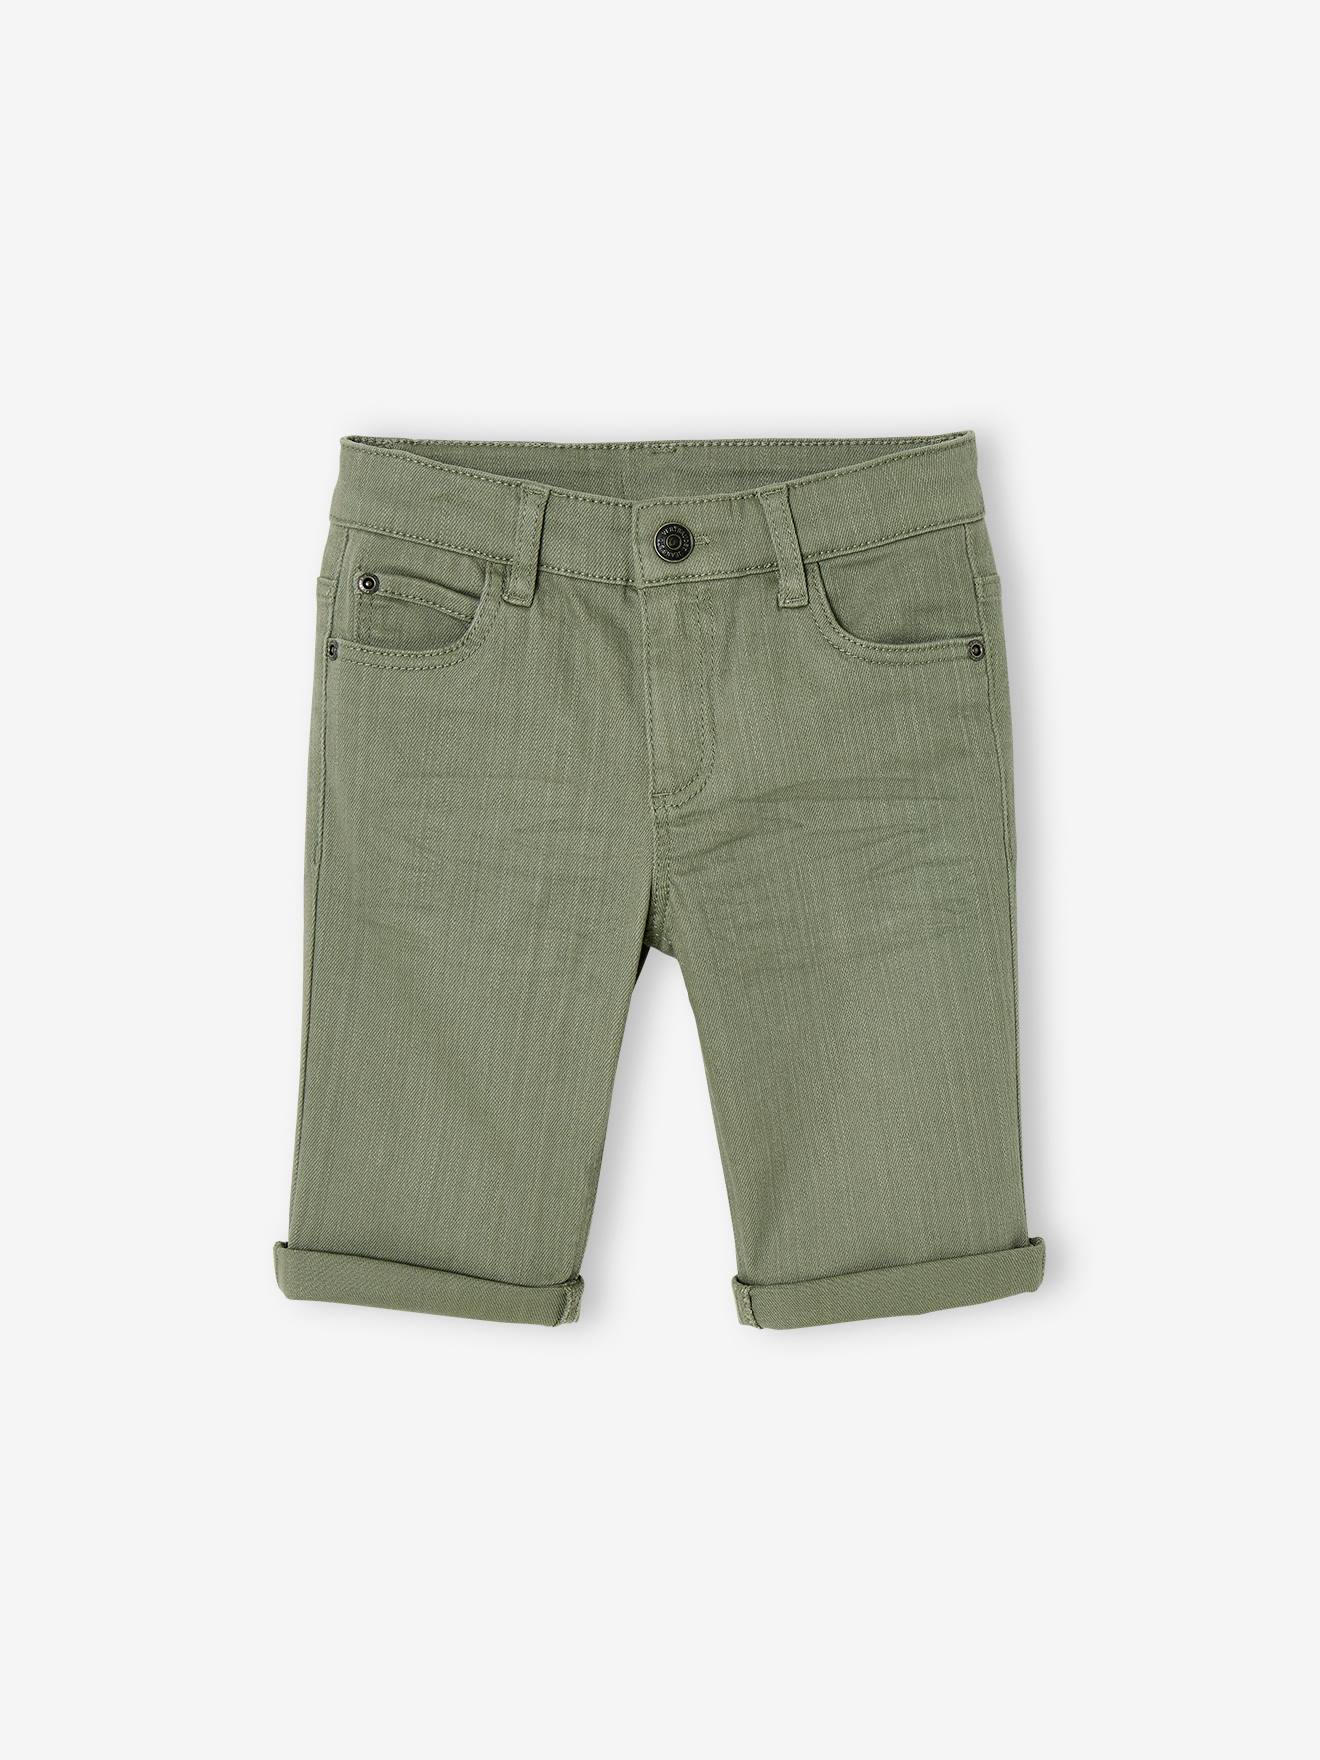 Bermuda Shorts for Boys olive